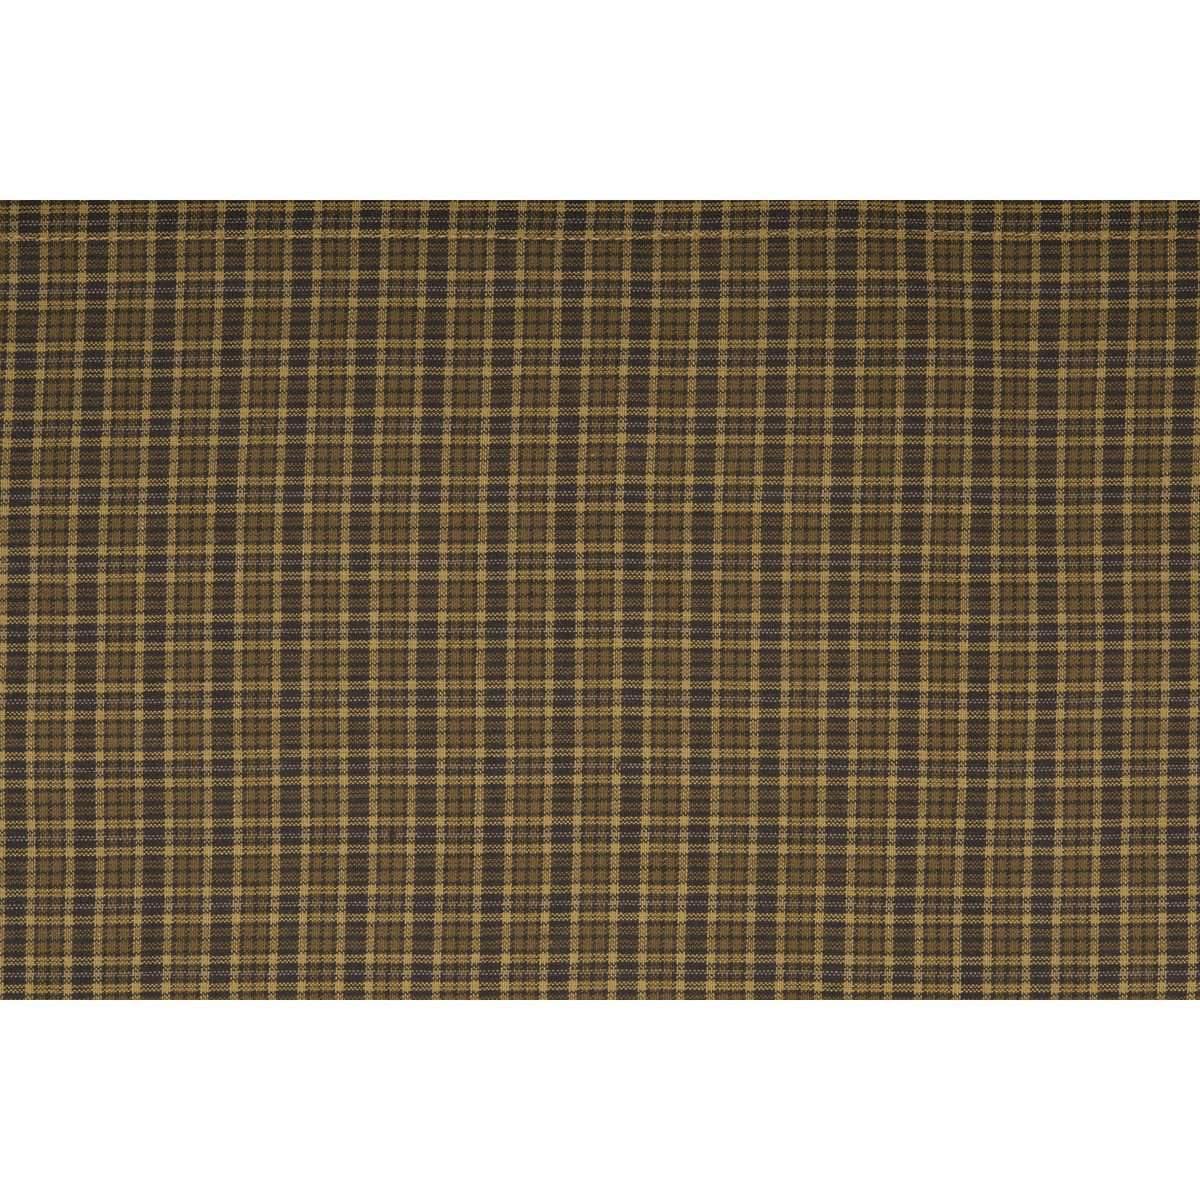 Tea Cabin Green Plaid Valance Curtain 16x60 VHC Brands - The Fox Decor